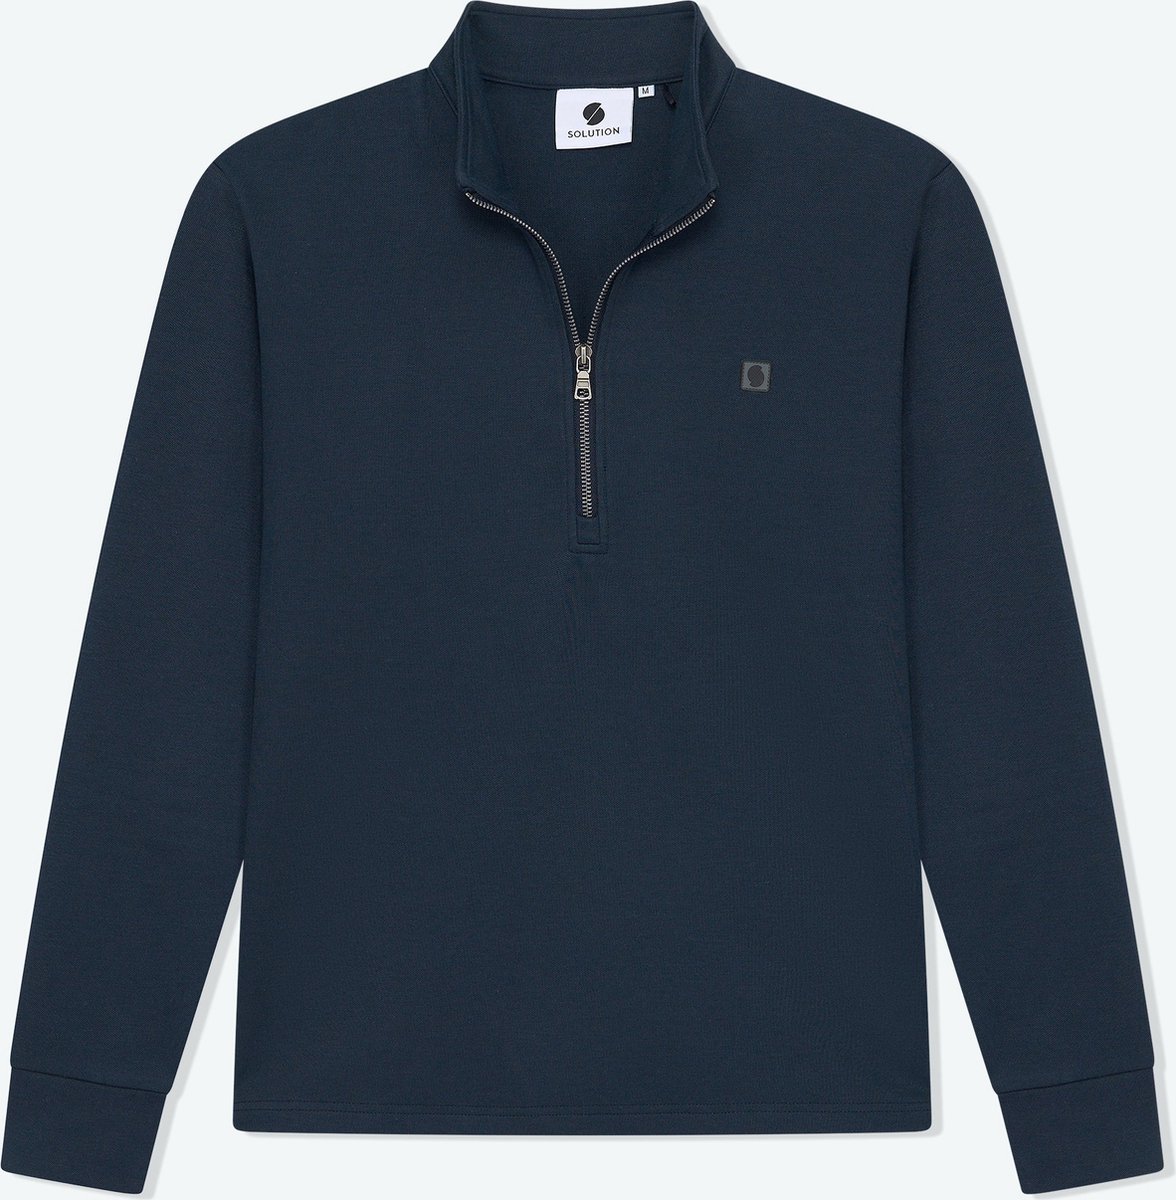 Zipper sweater Salvador Navy - XL - Solution Clothing